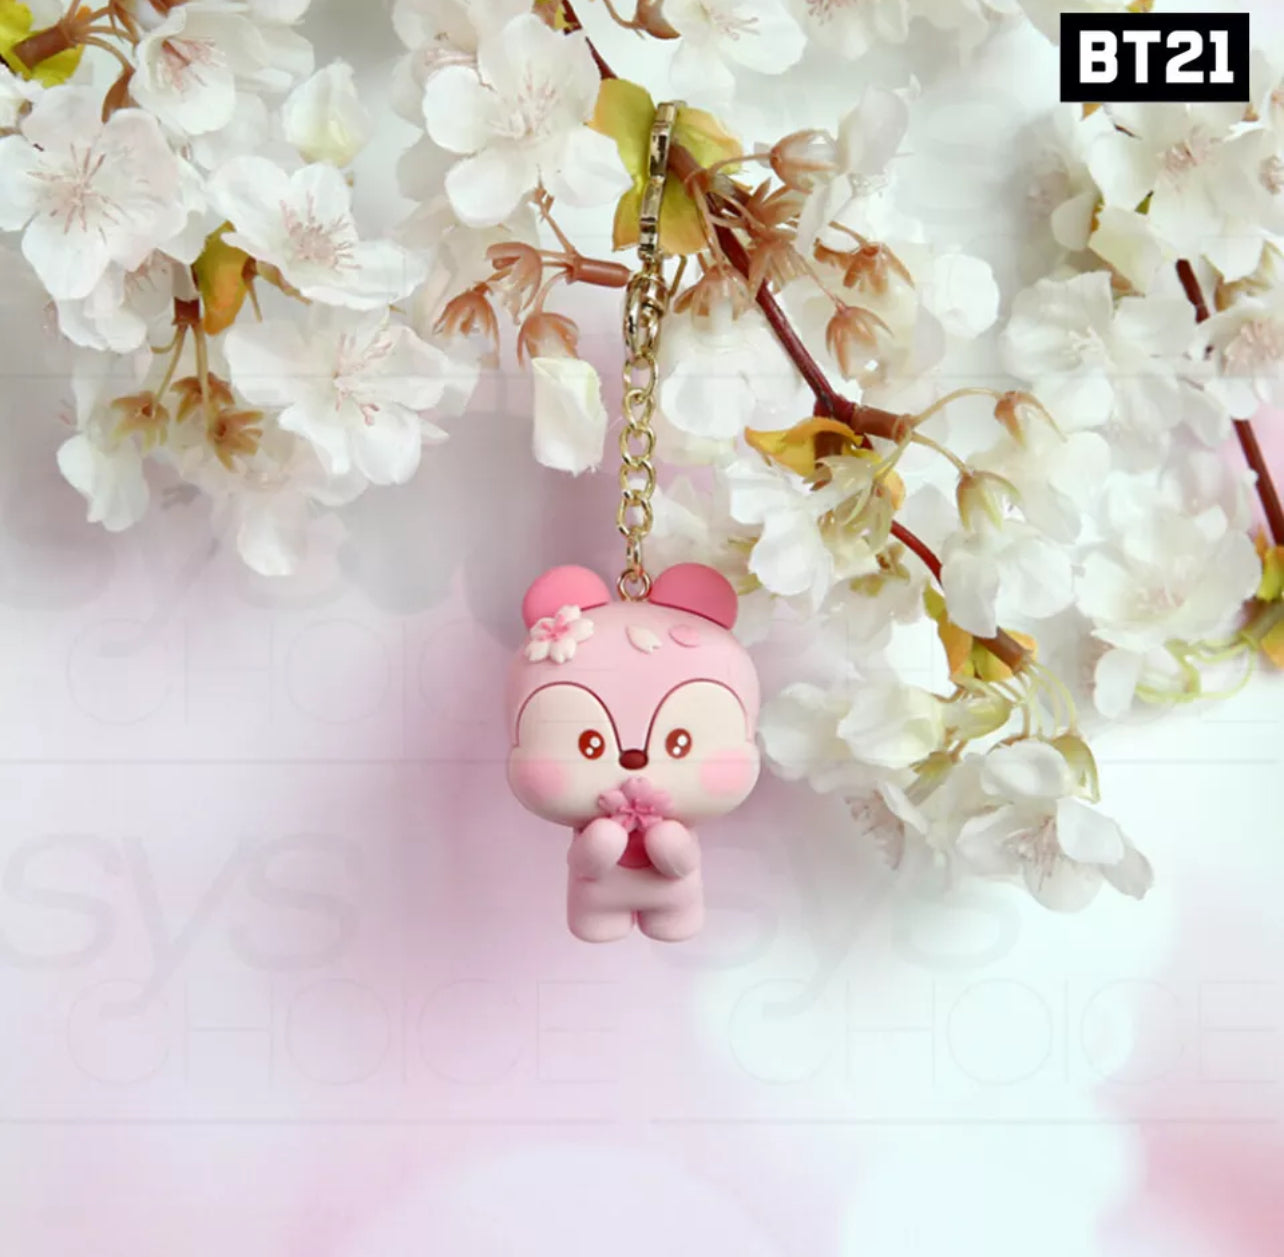 BTS BT21 Mini Figure Keyring Cherry Blossom